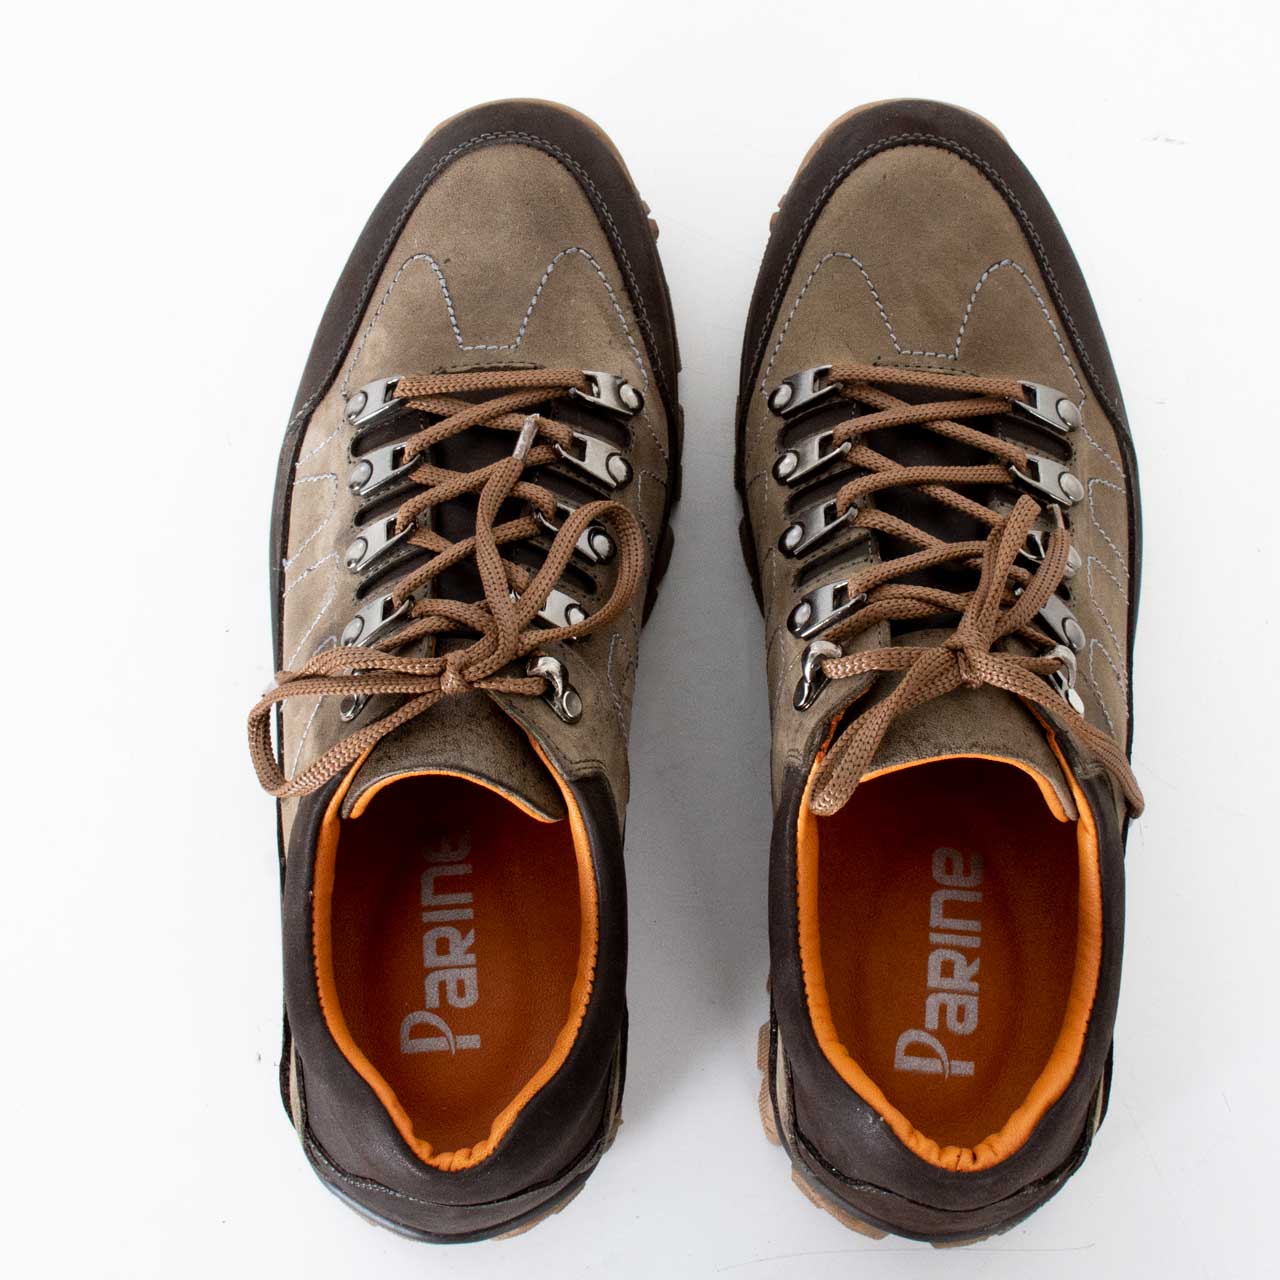 PARINECHARM leather men's hiking boots ,SHO221-8  Model